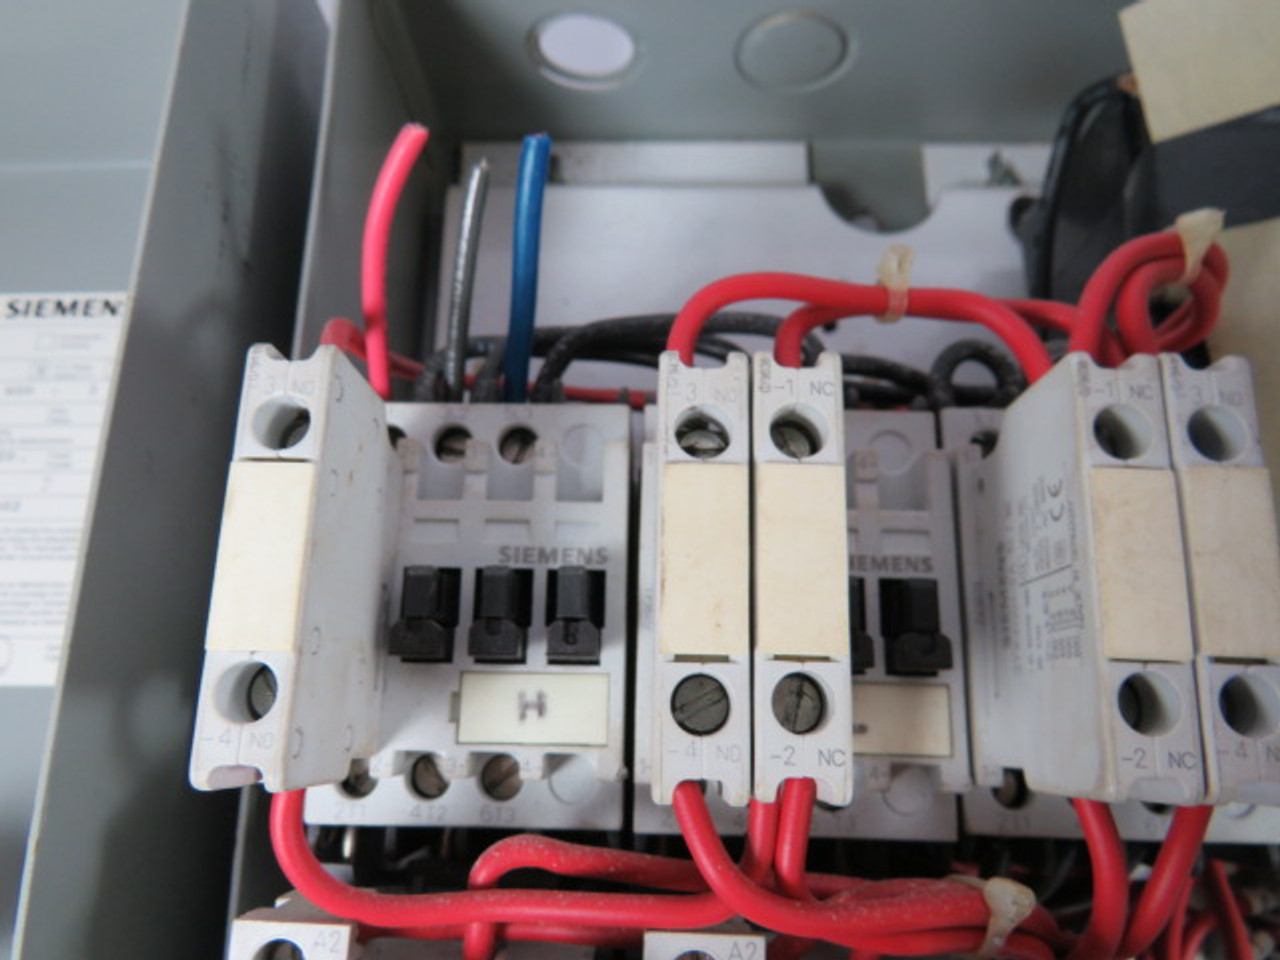 Siemens 2S1W Series 2 Combination Motor Controller 600V 3Ph 60Hz USED